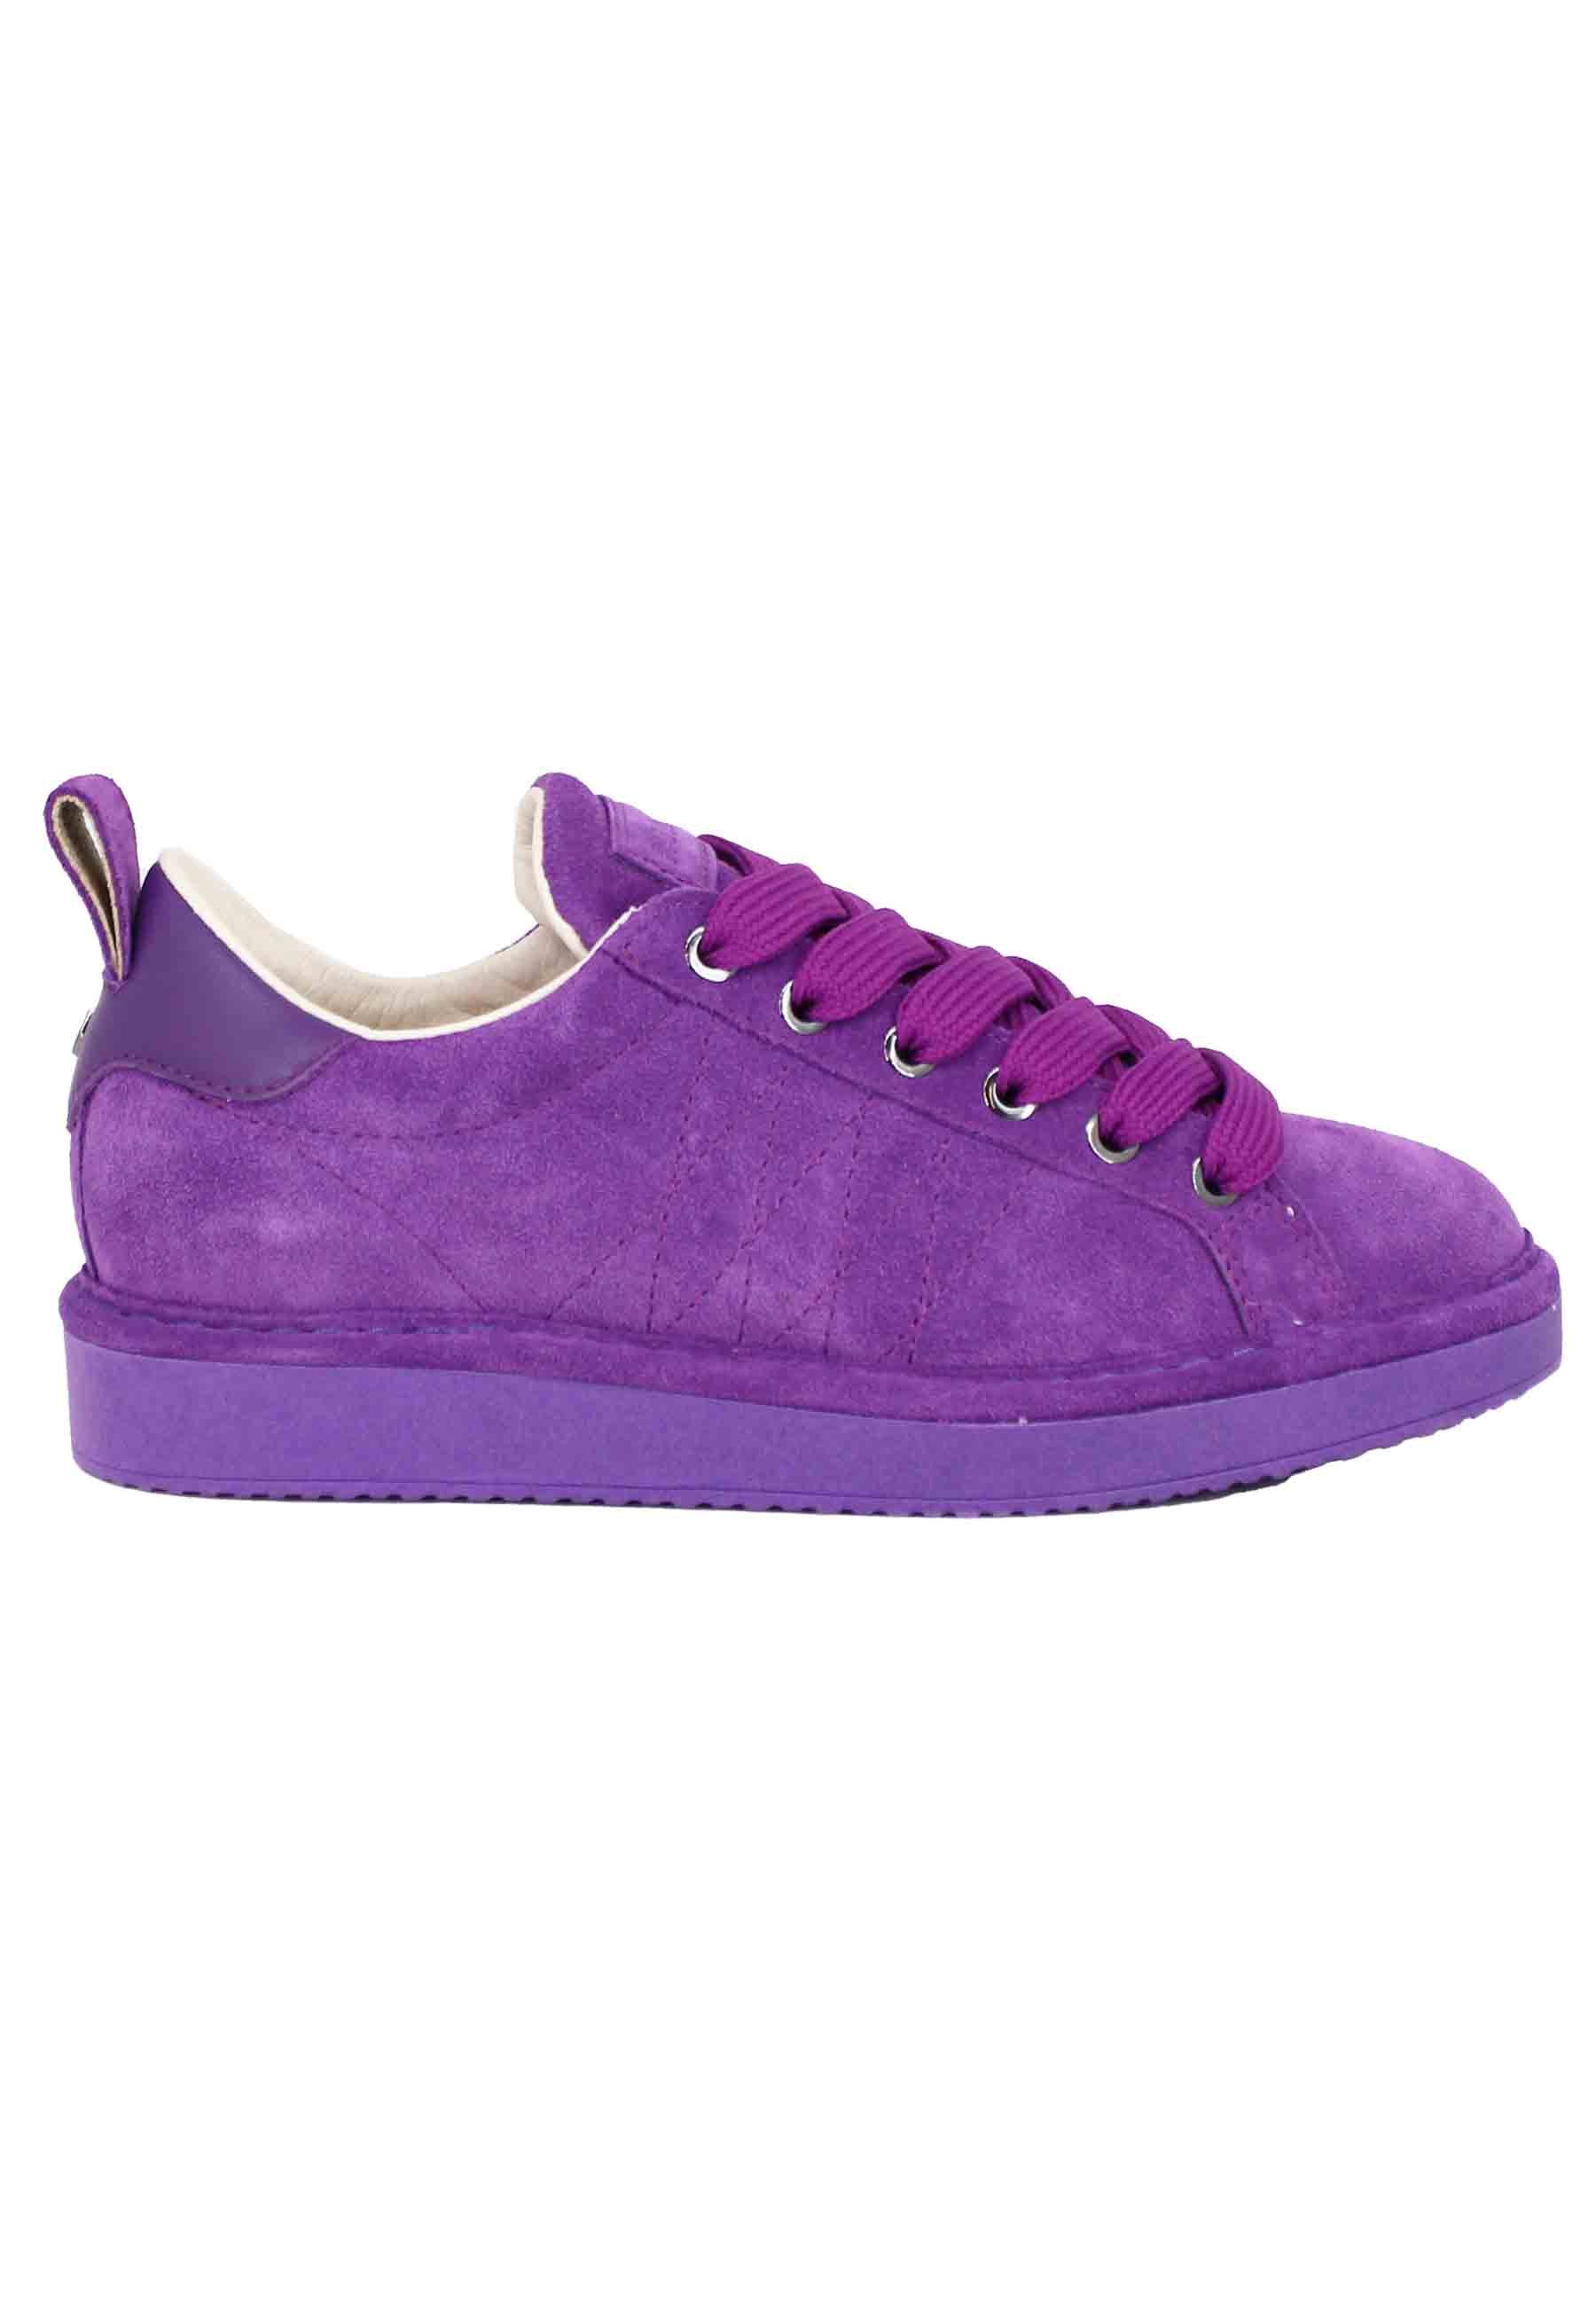 Women's sneakers in purple eco suede